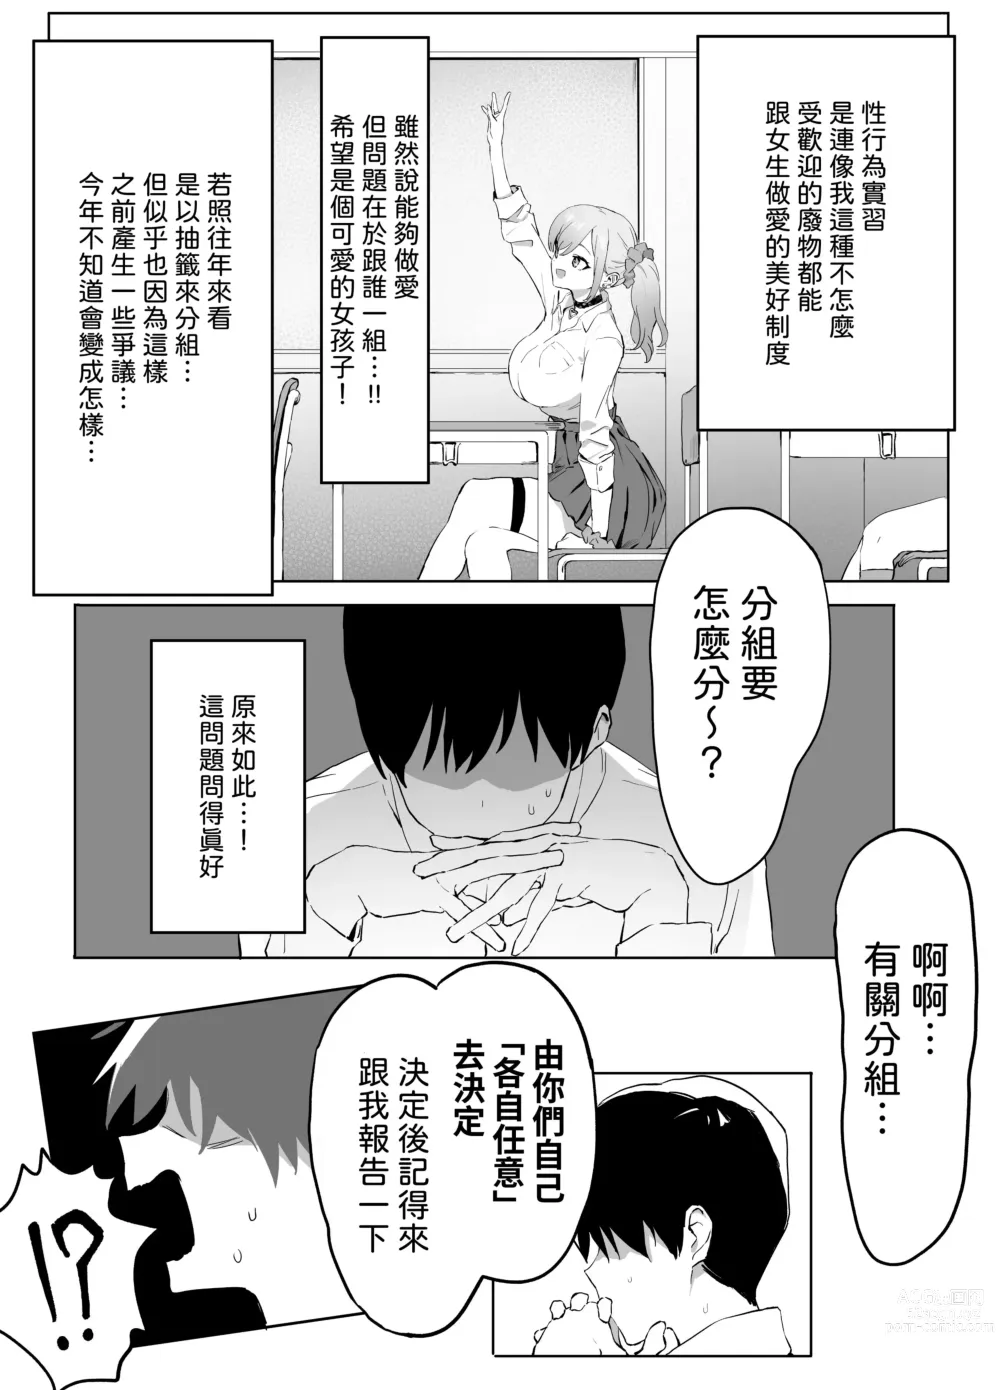 Page 5 of doujinshi Seikoui Jisshuu!